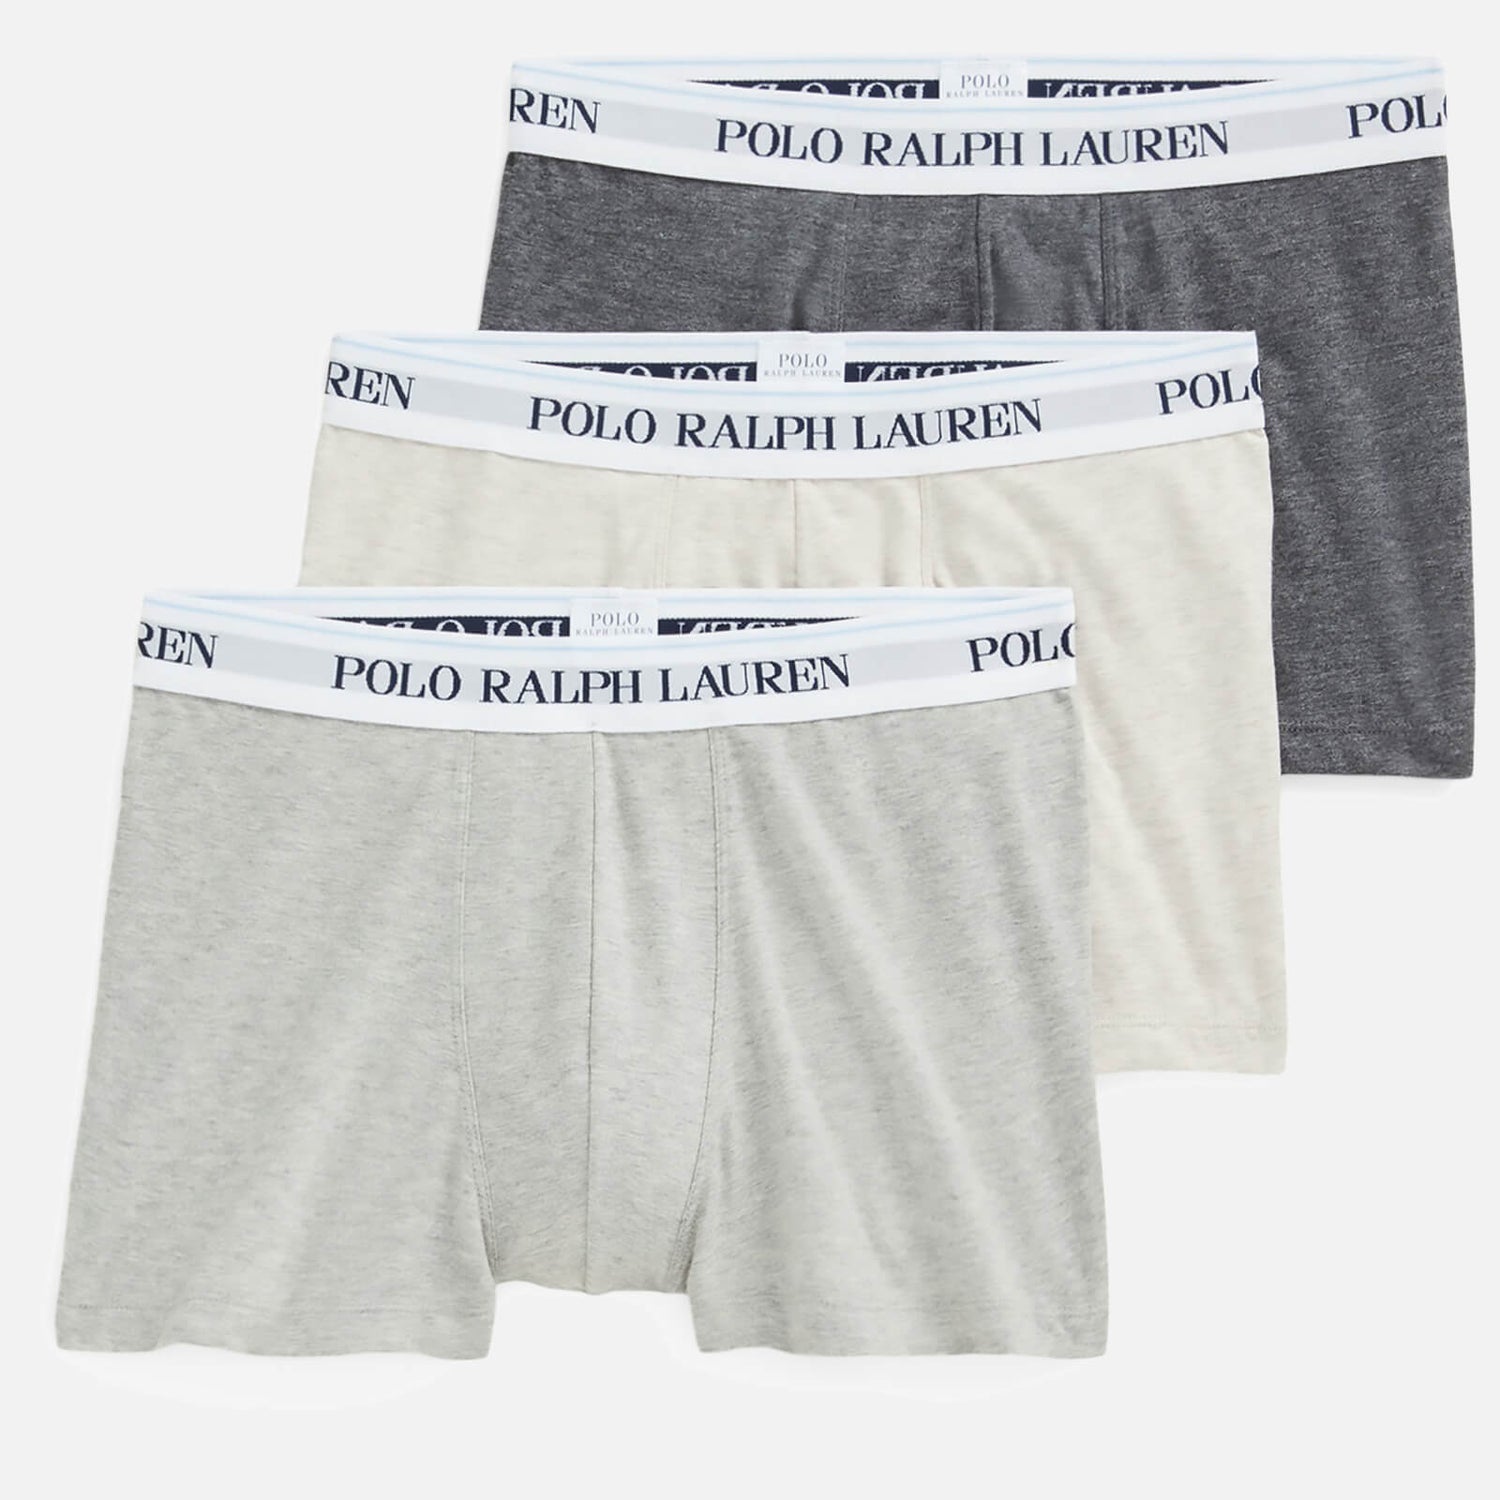 Polo Ralph Lauren Men's 3-Pack Trunk Boxer Shorts - Andover Heather/Light Sport Heather/Charcoal Heather - S